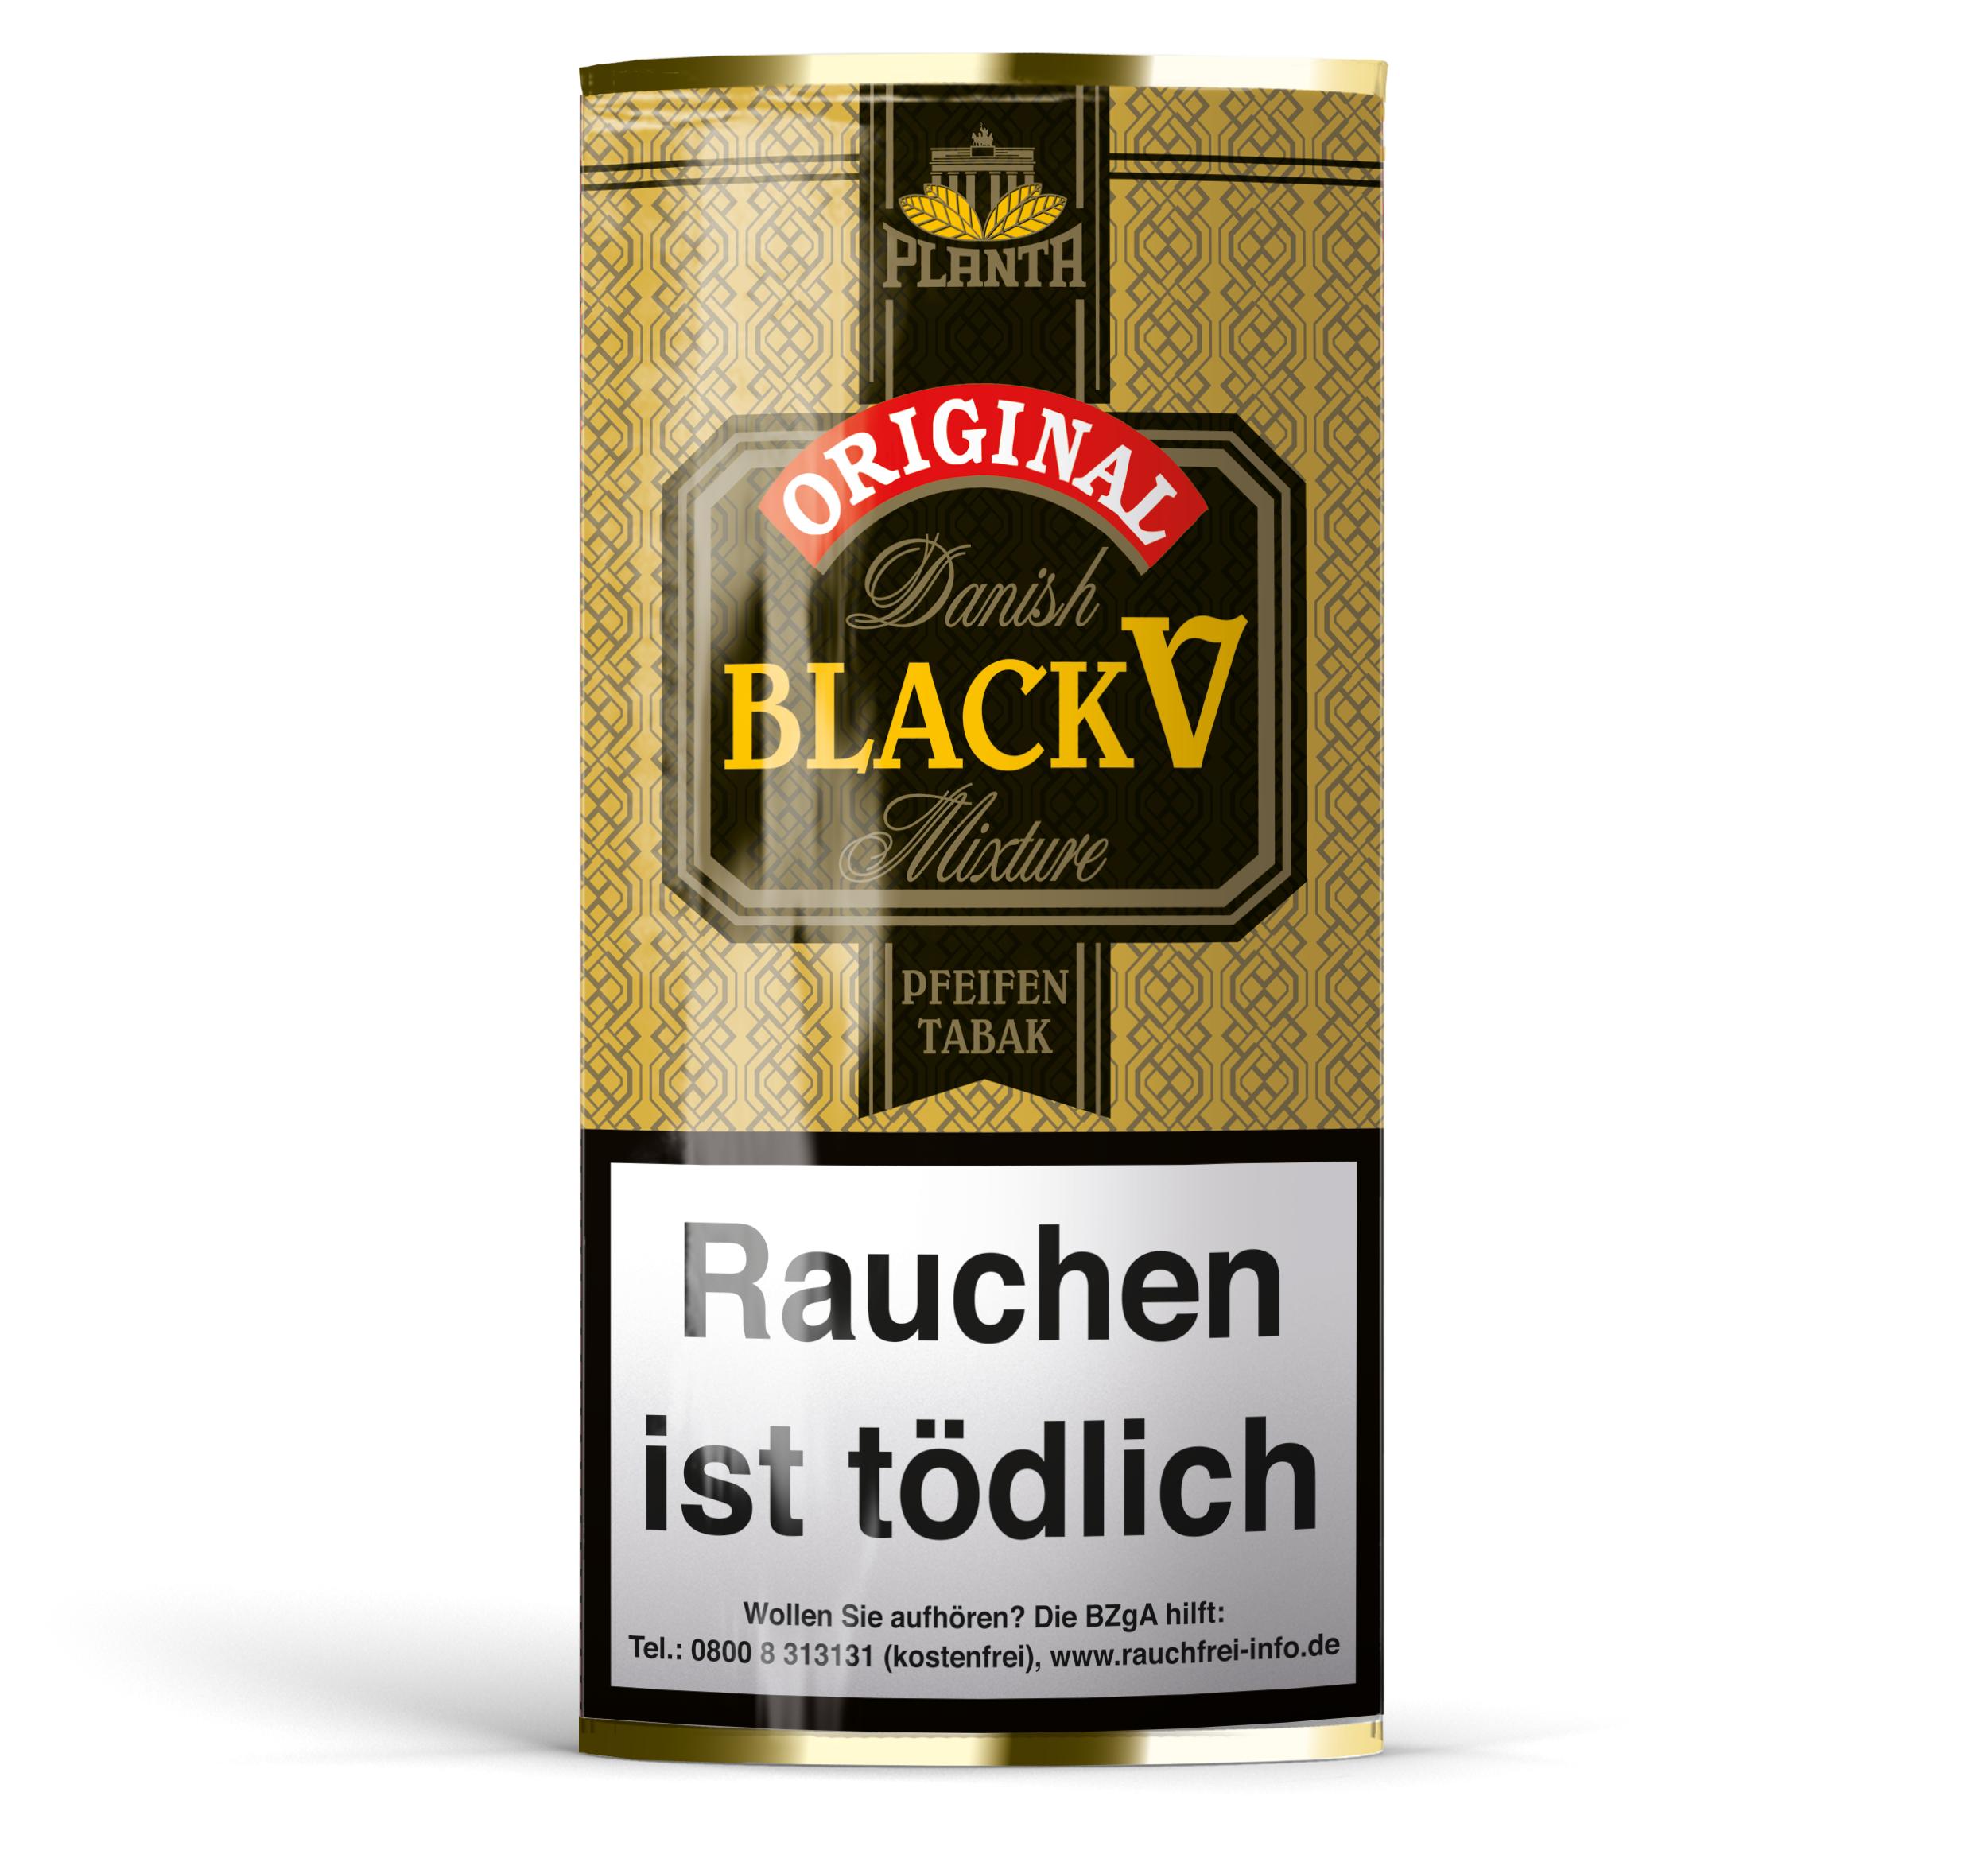 Danish Black V Pfeifentabak 1 x 40g Krüll